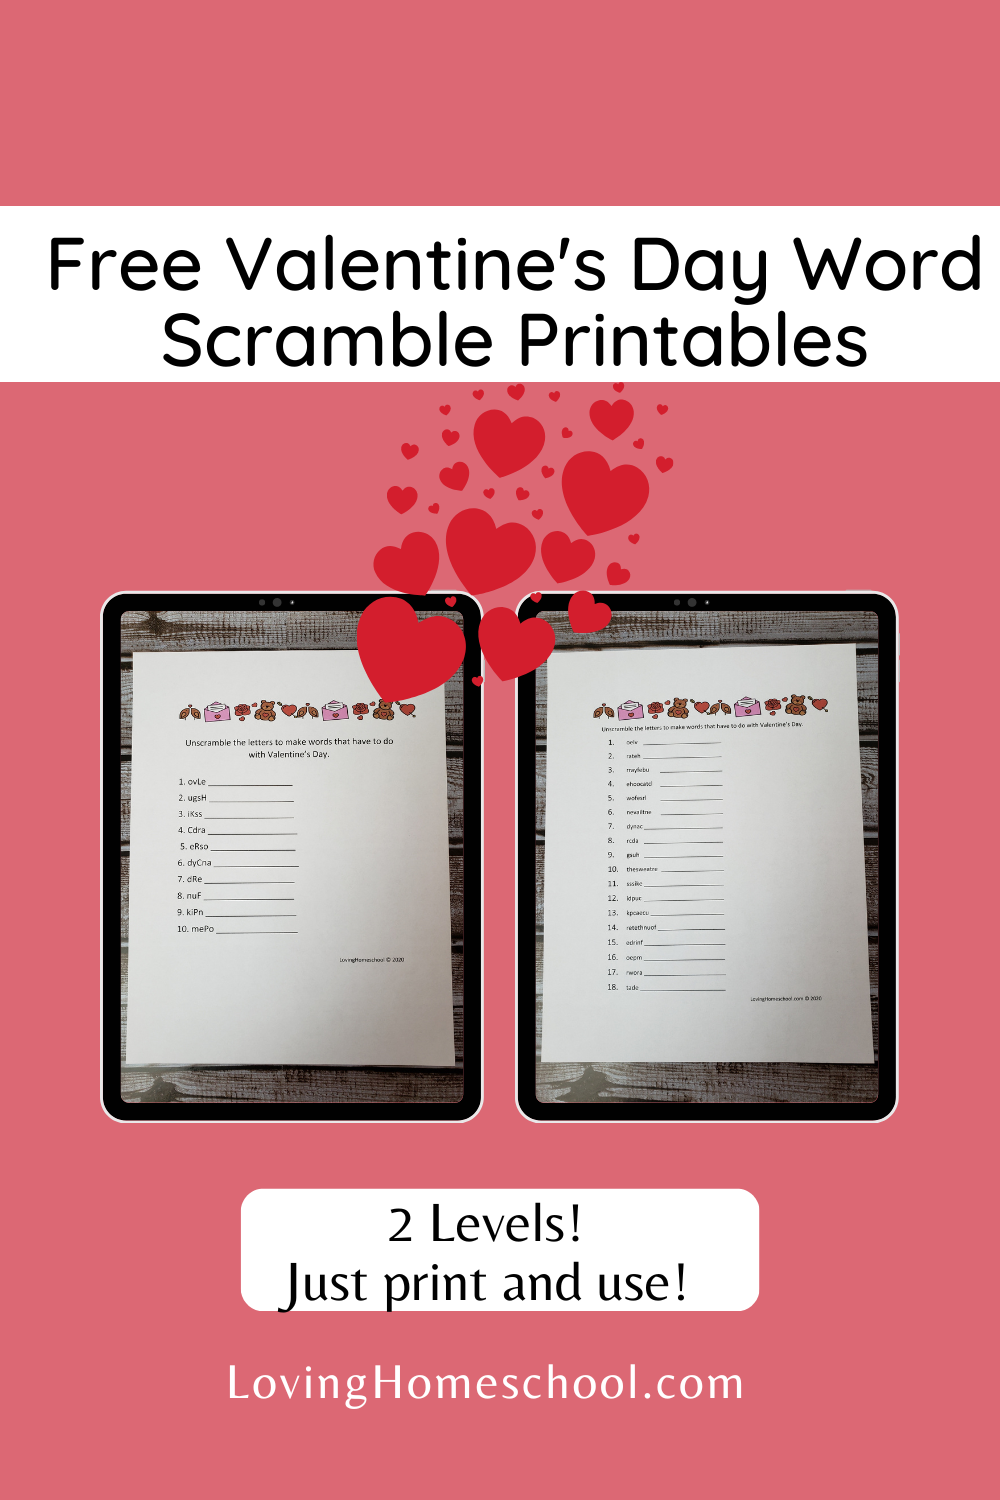 Valentine's Day Word Scramble Pinterest Pin